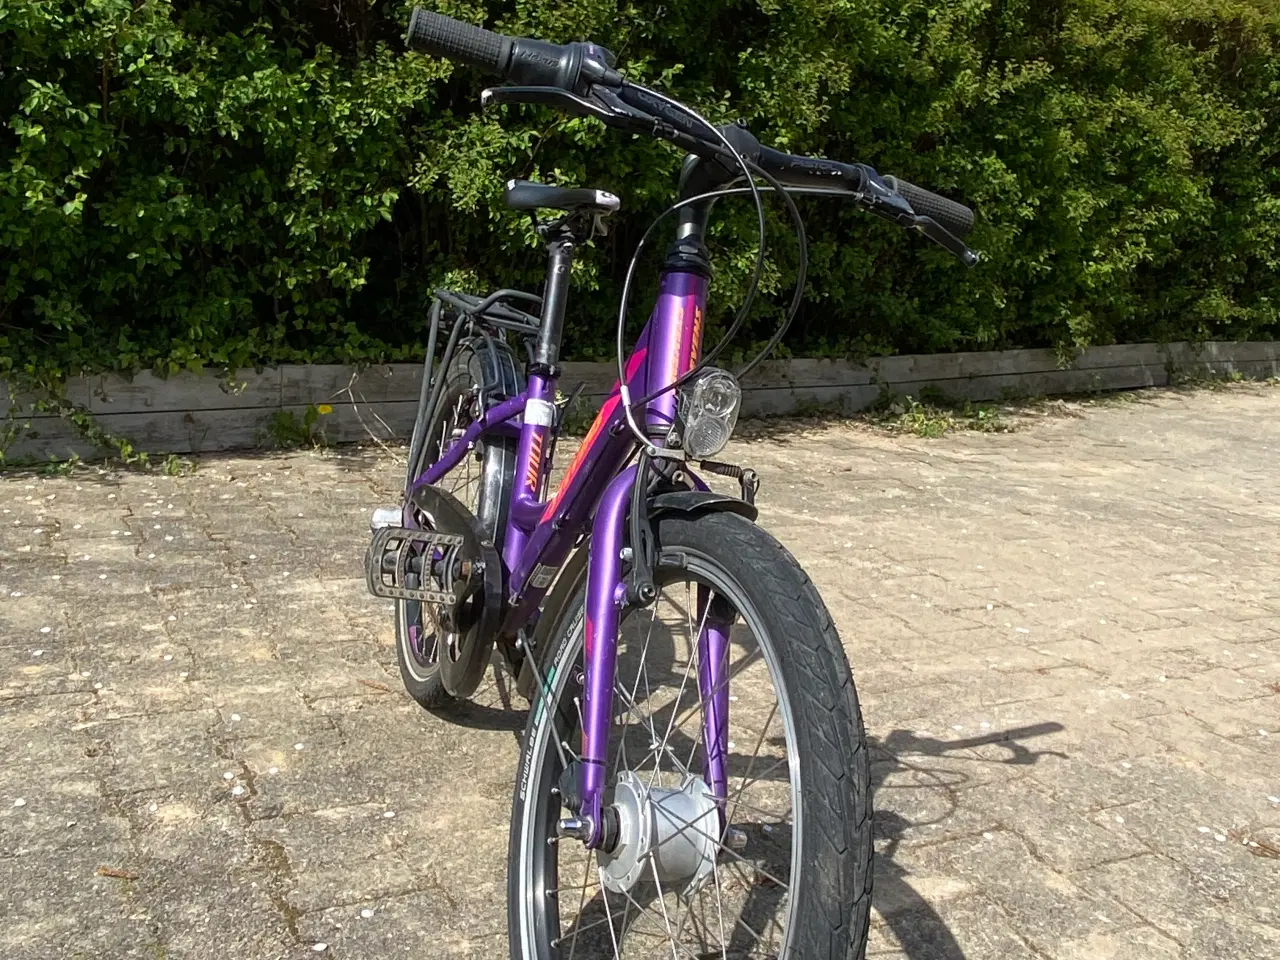 Billede 3 - Flot pigecykel m gear og dynamo